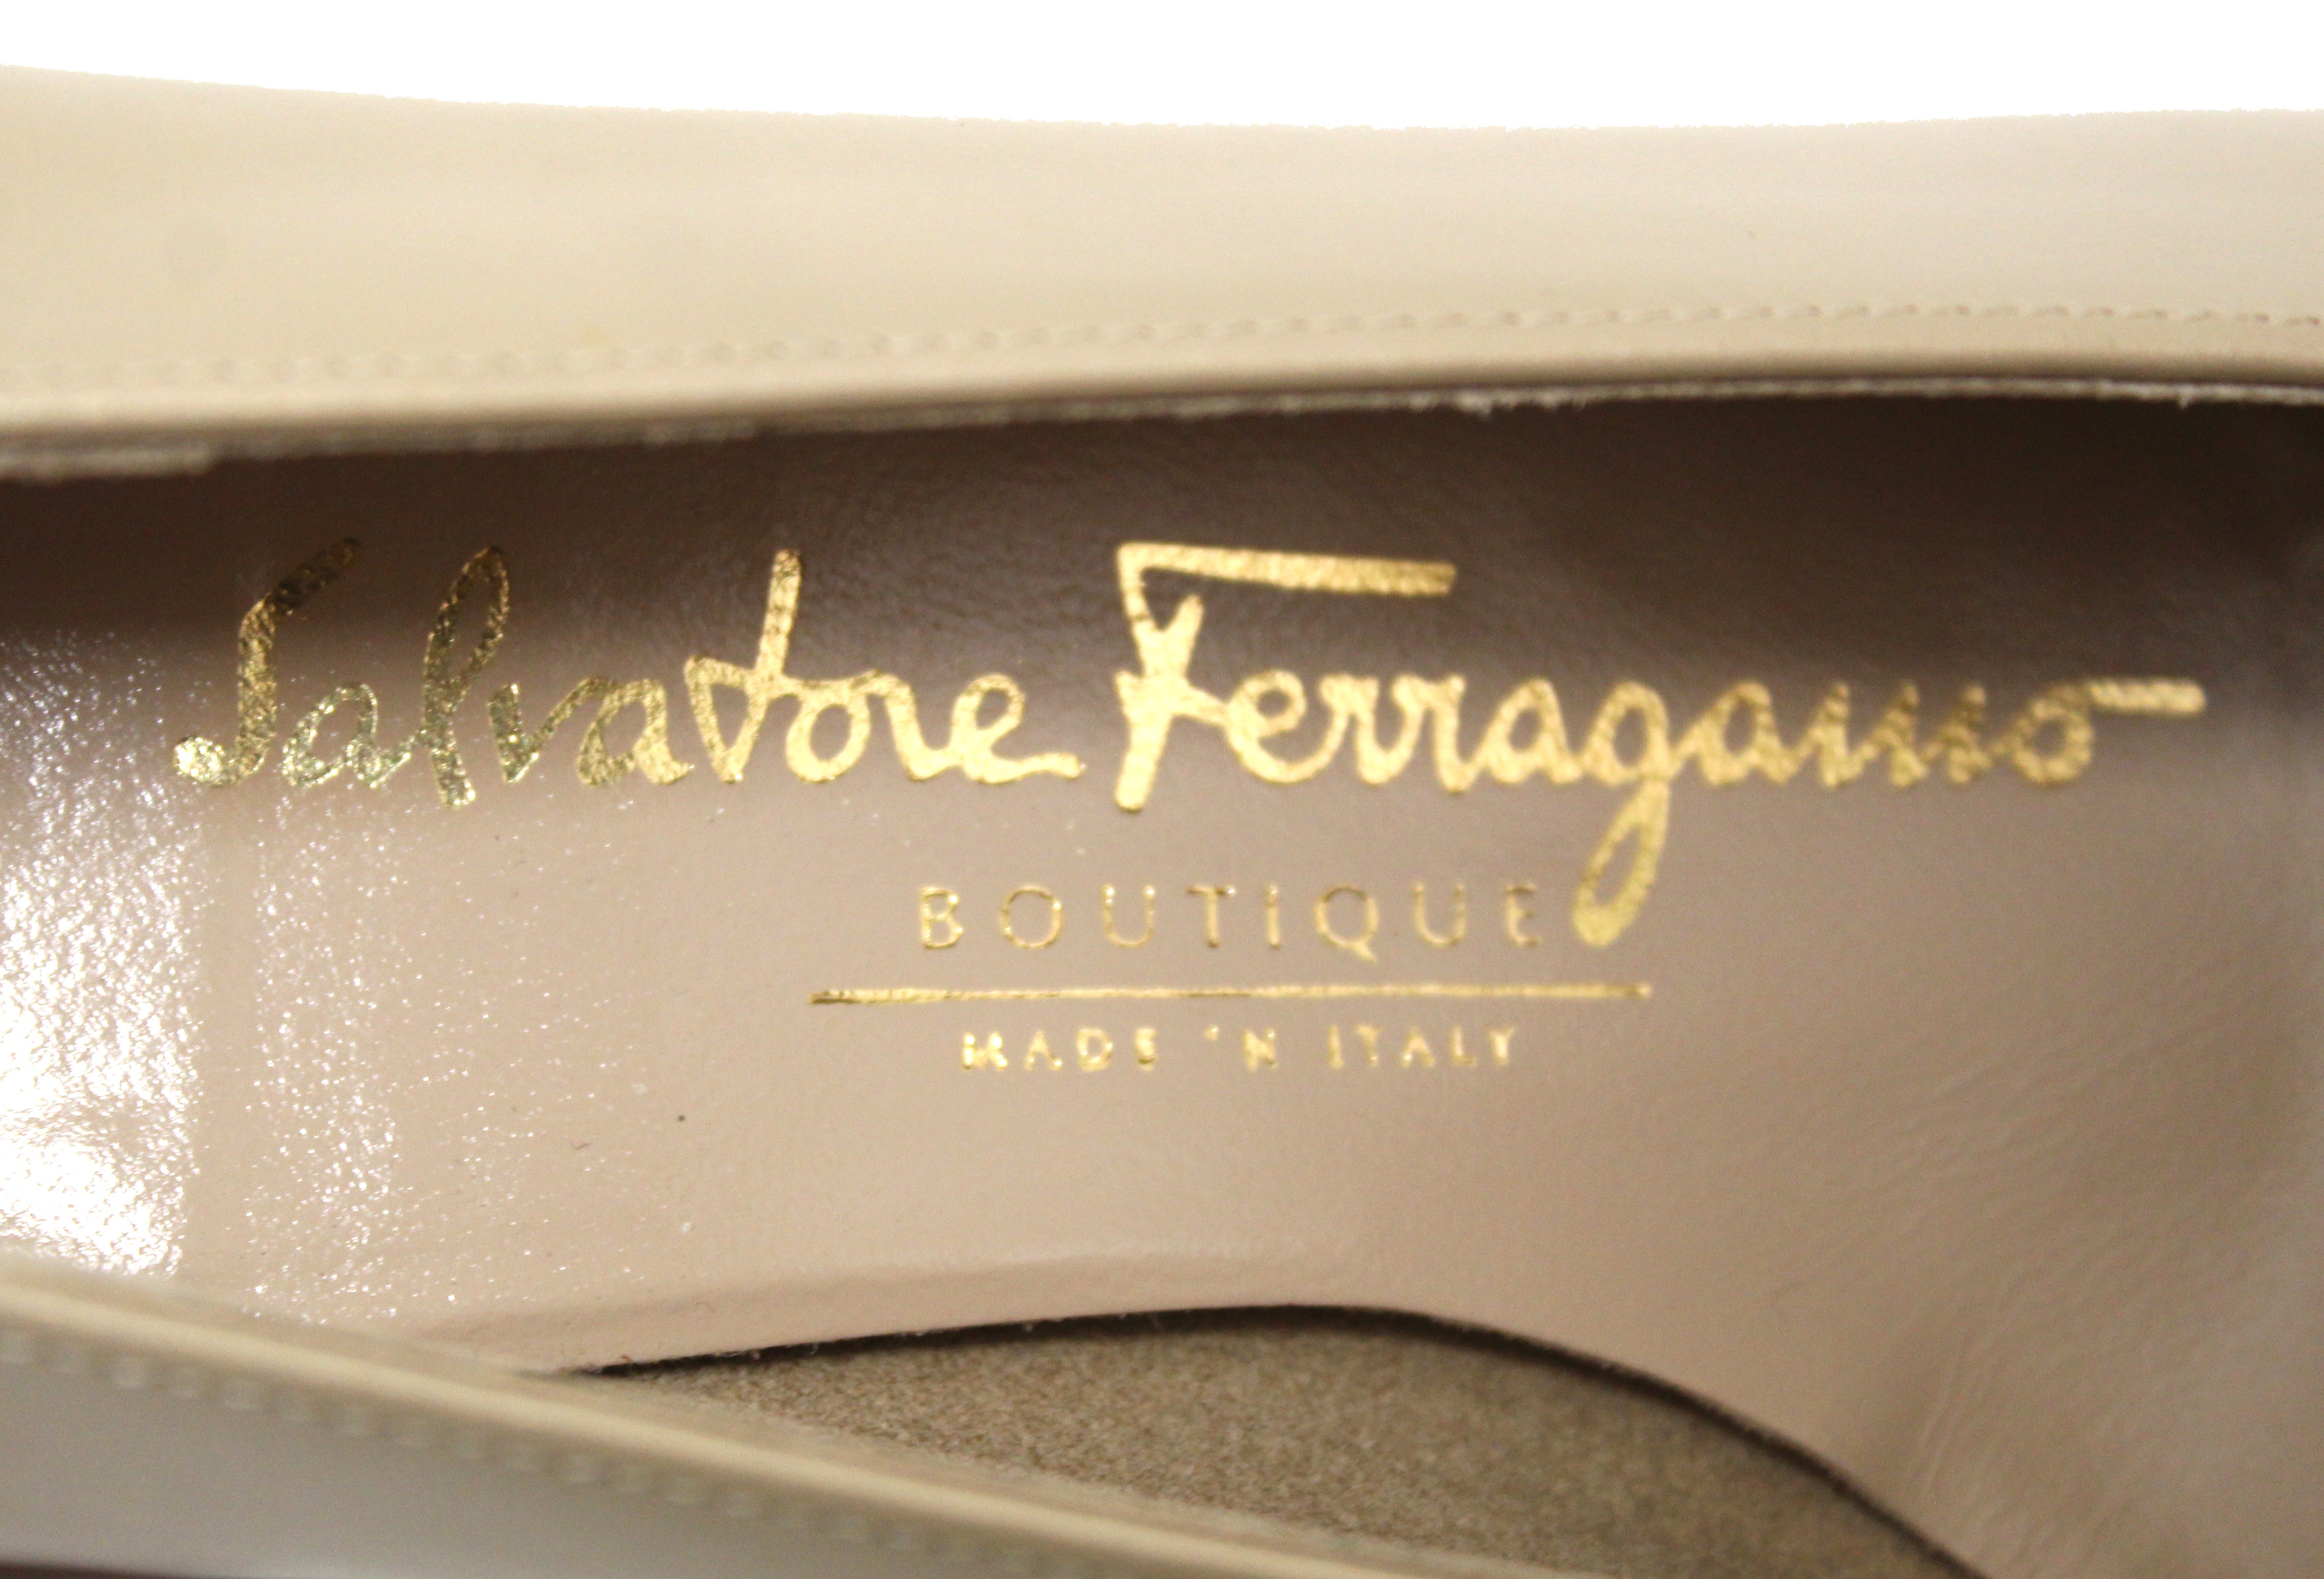 Authentic NEW Salvatore Ferragamo Beige Calf Leather Pumps Size 5.5B